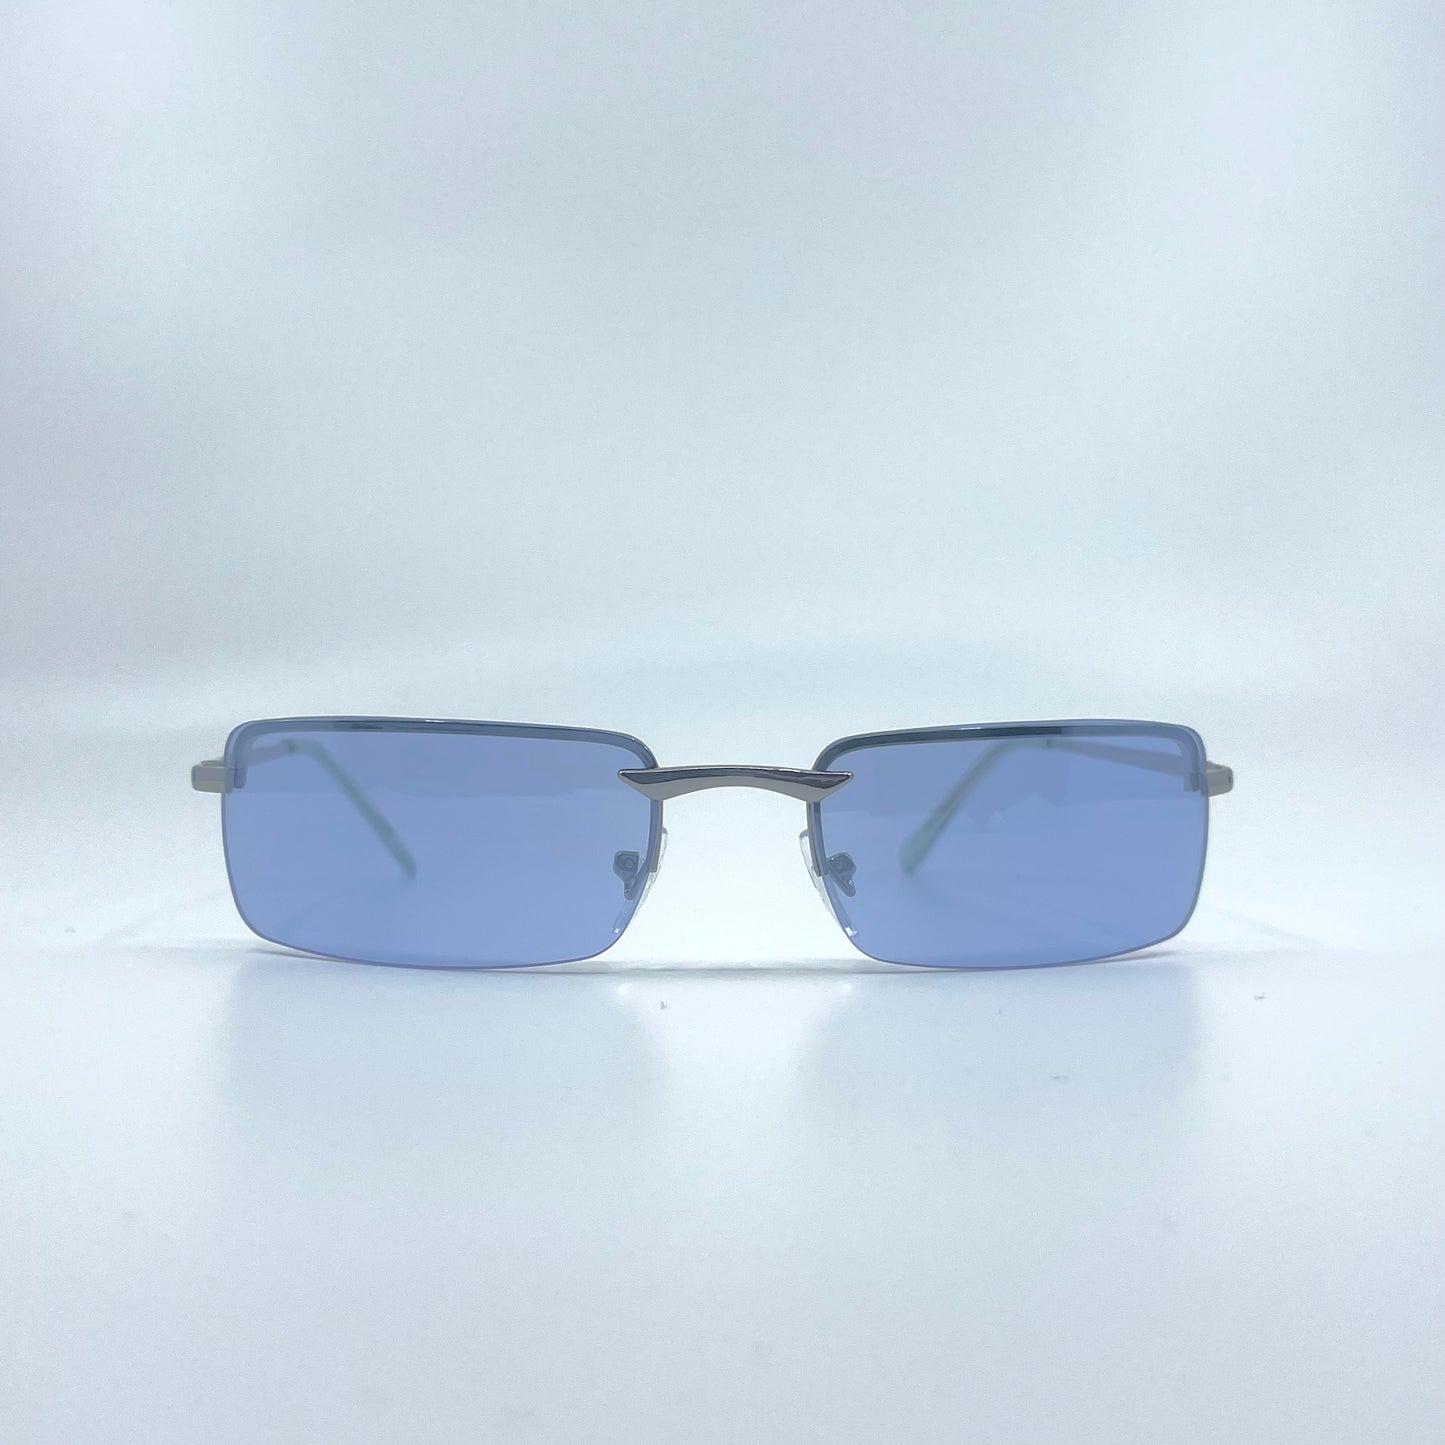 "90's" Sunglasses